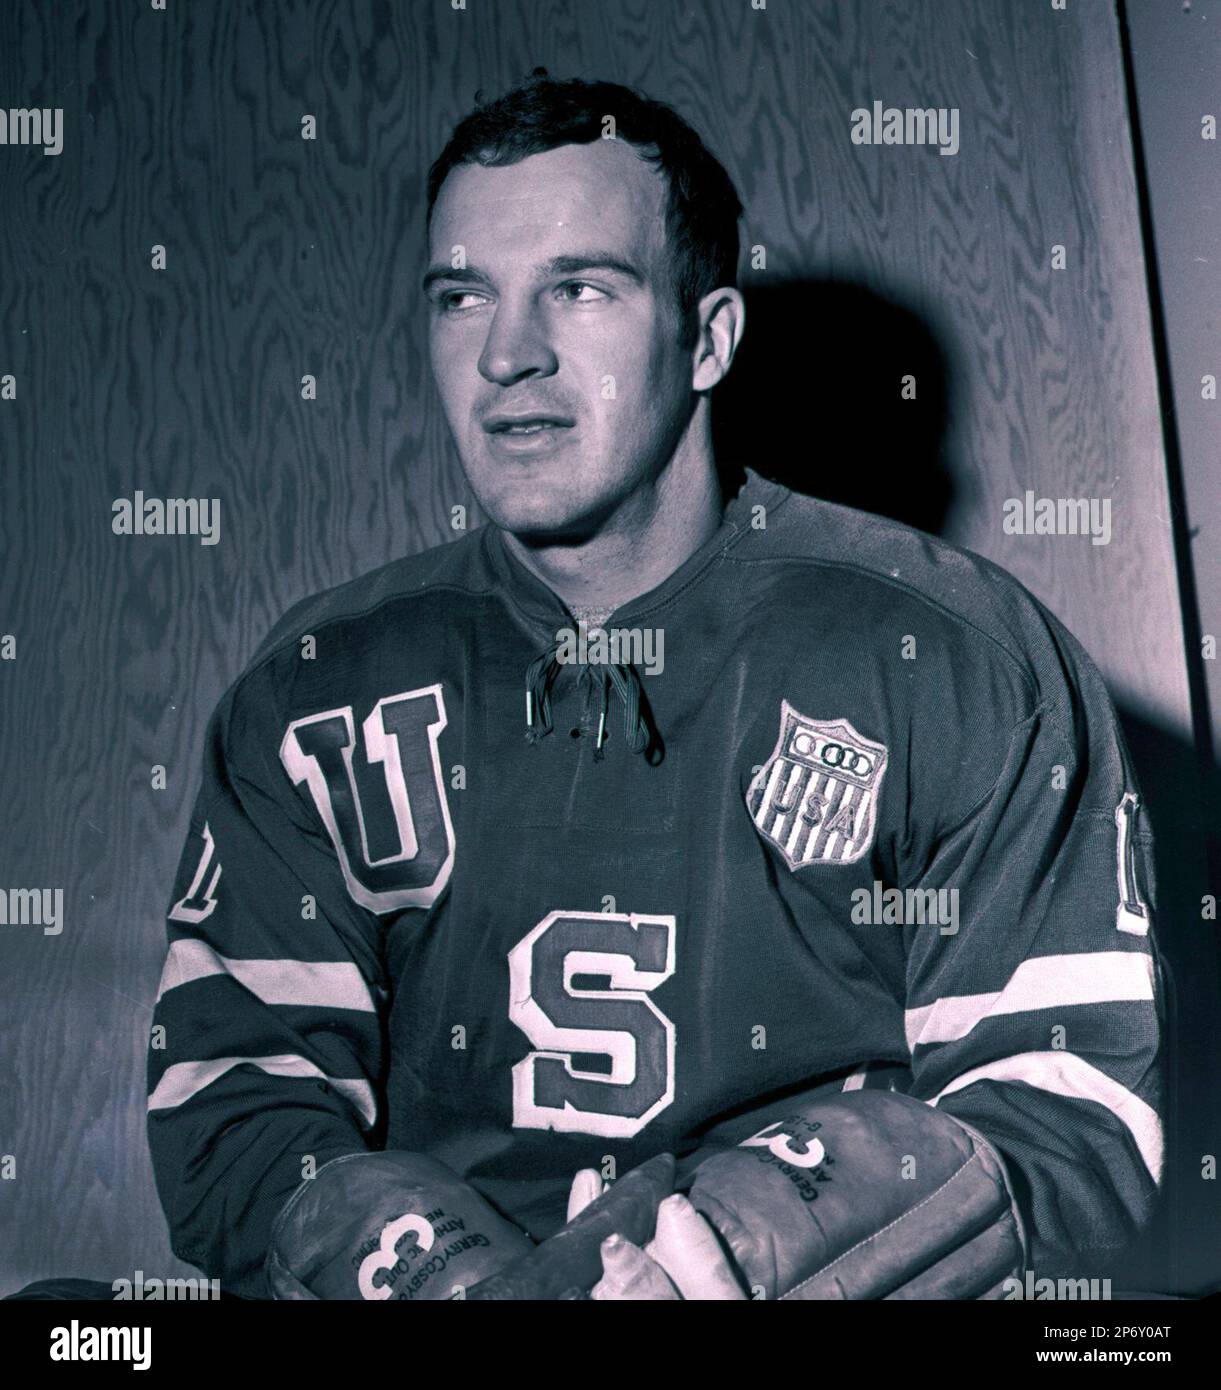 1960 Gold Medal USA Hockey Team